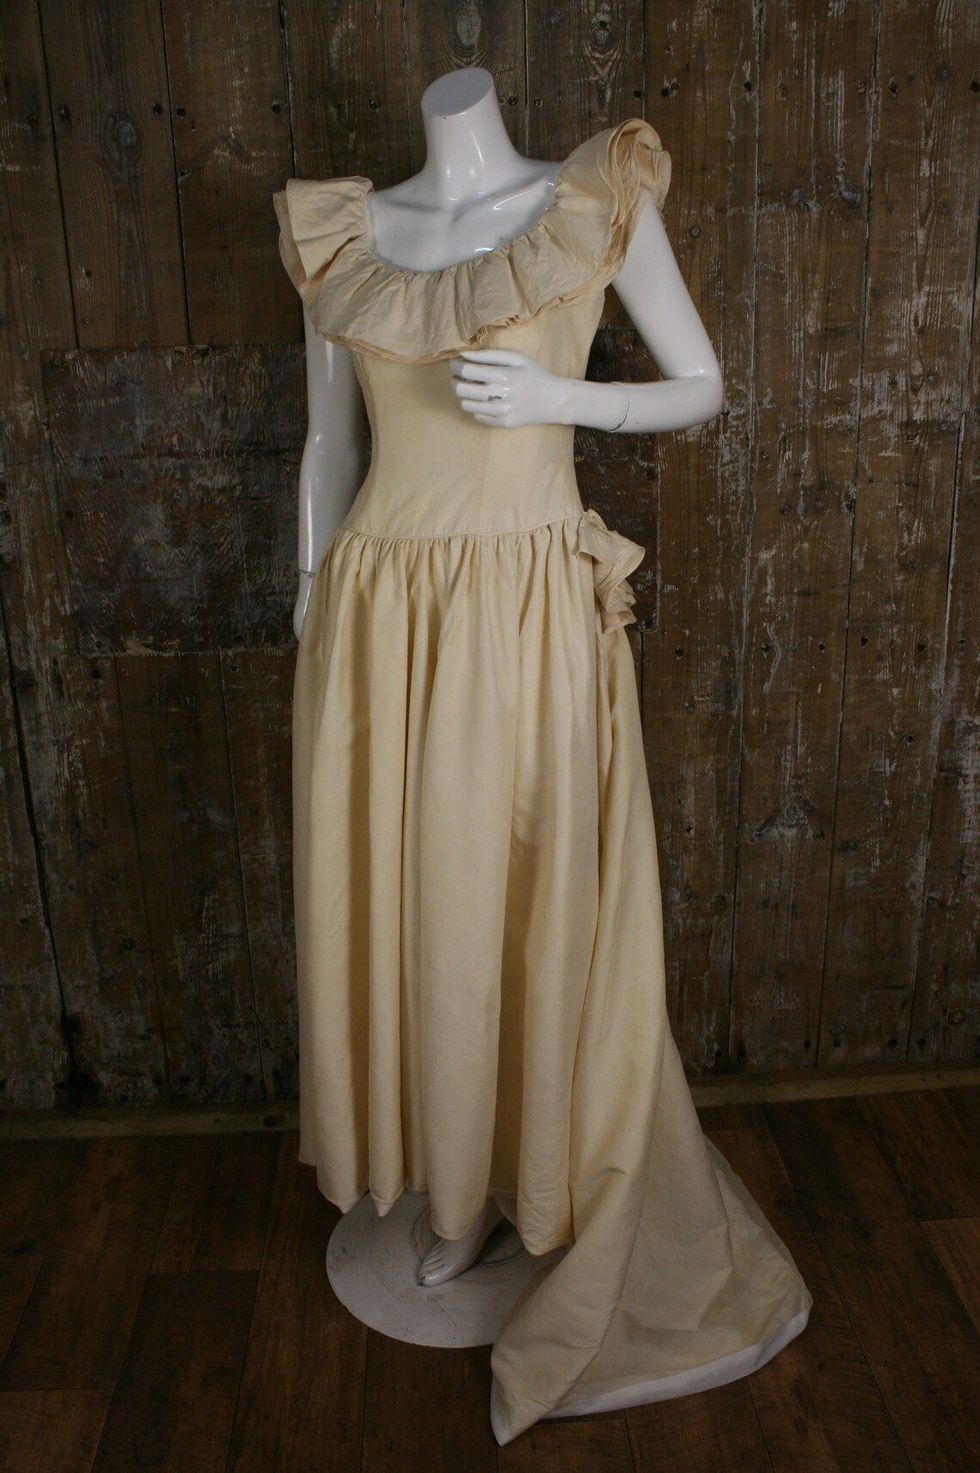 Ballerina Length Wedding Dress - Size 10